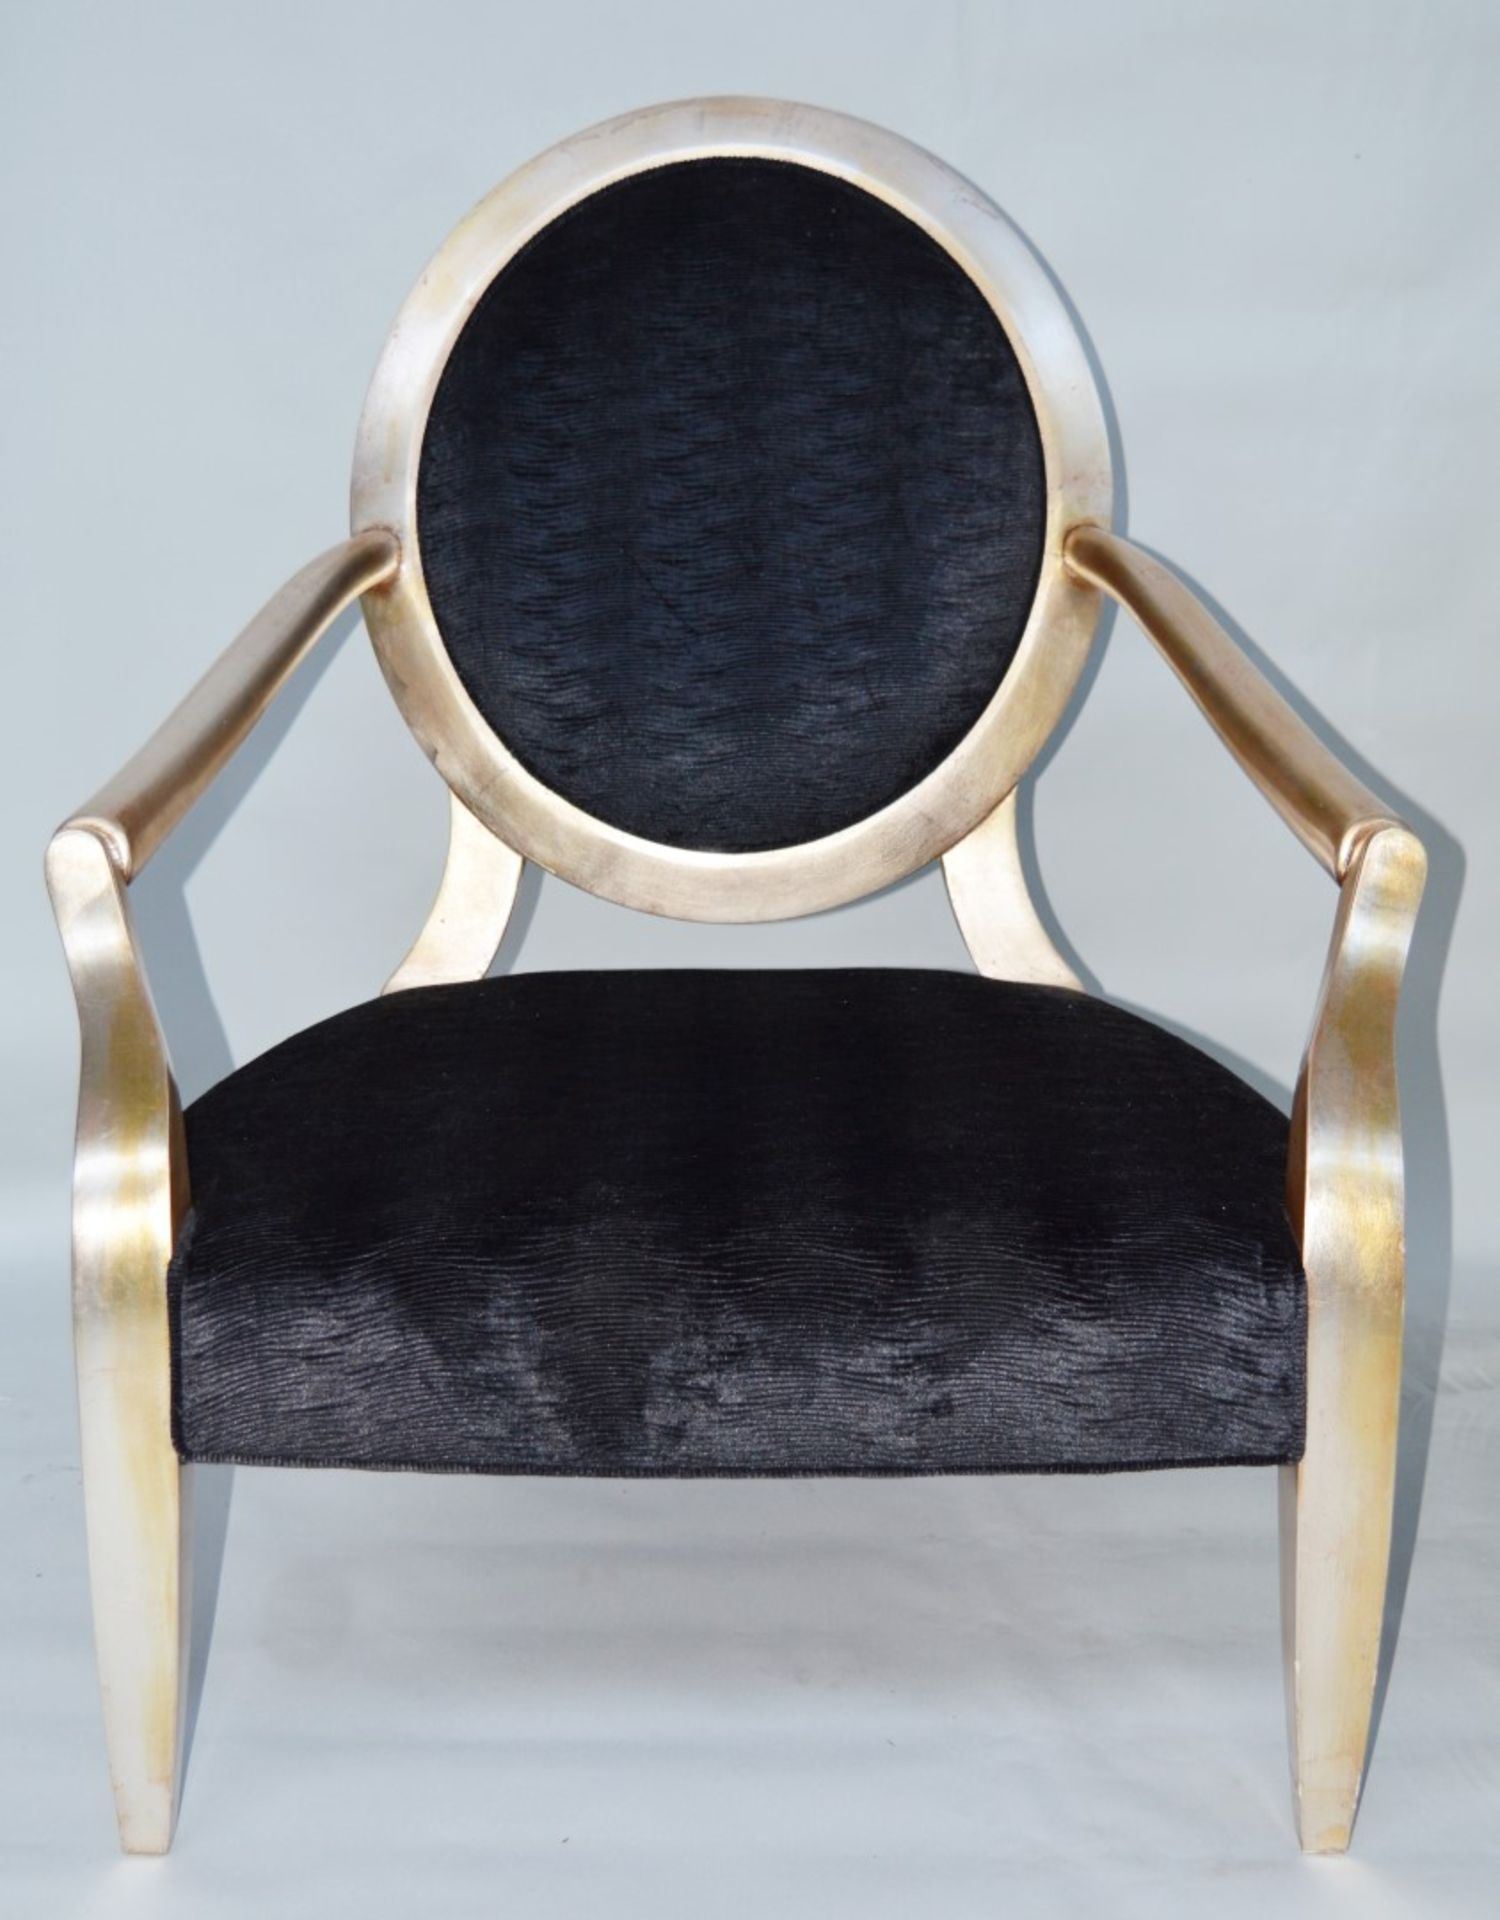 2 x Duresta Nero Chairs - individual Fabric - CL08 - Location Altrincham, WA14 - Image 5 of 7